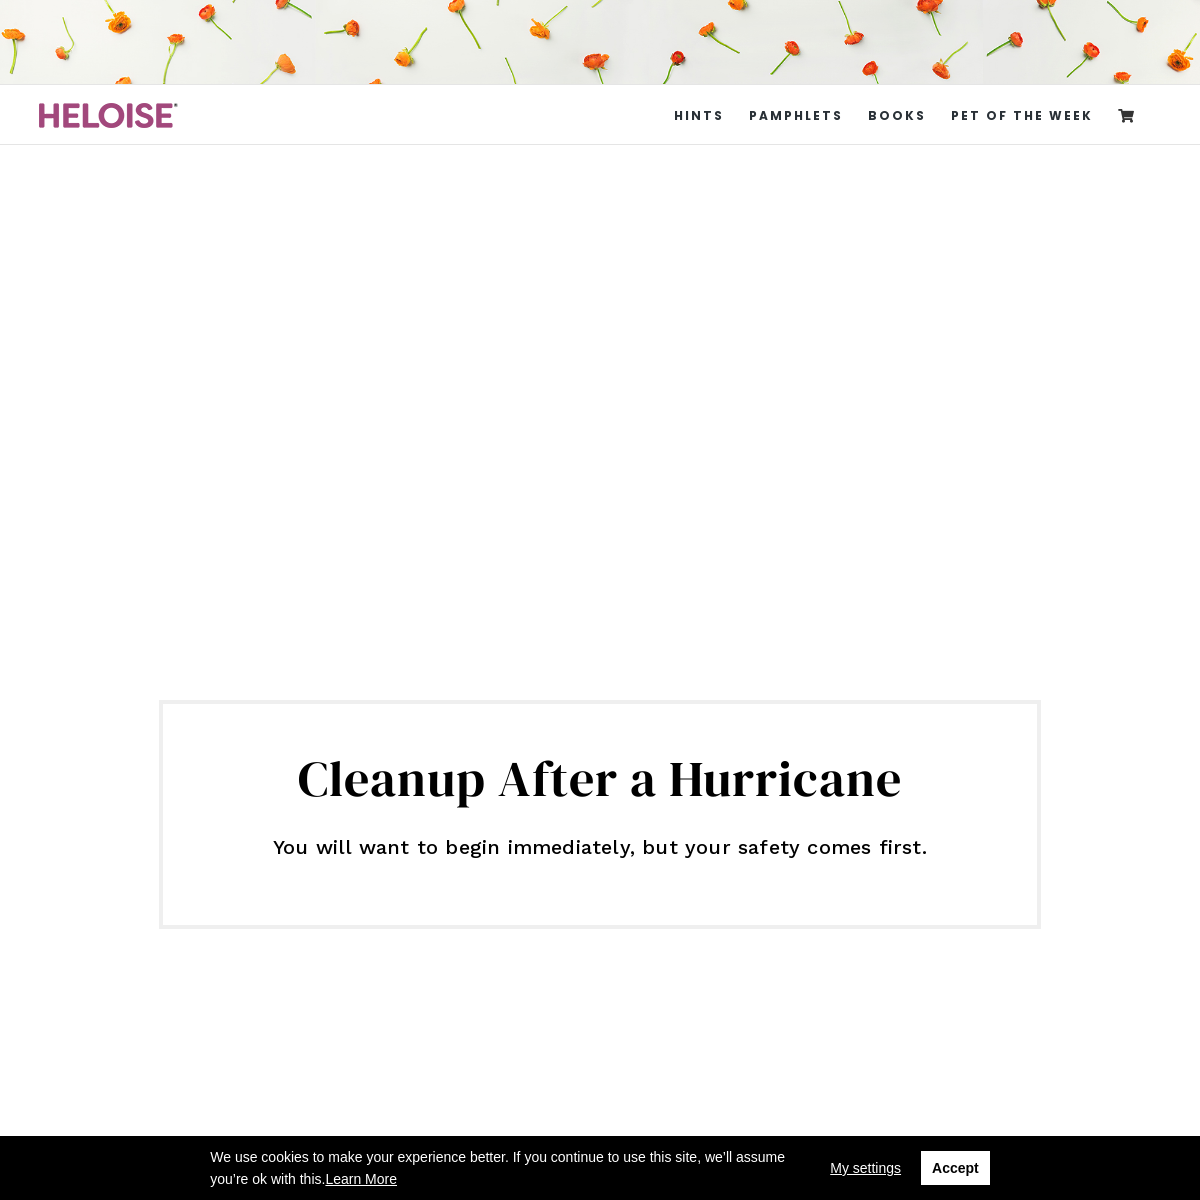 A complete backup of heloise.com